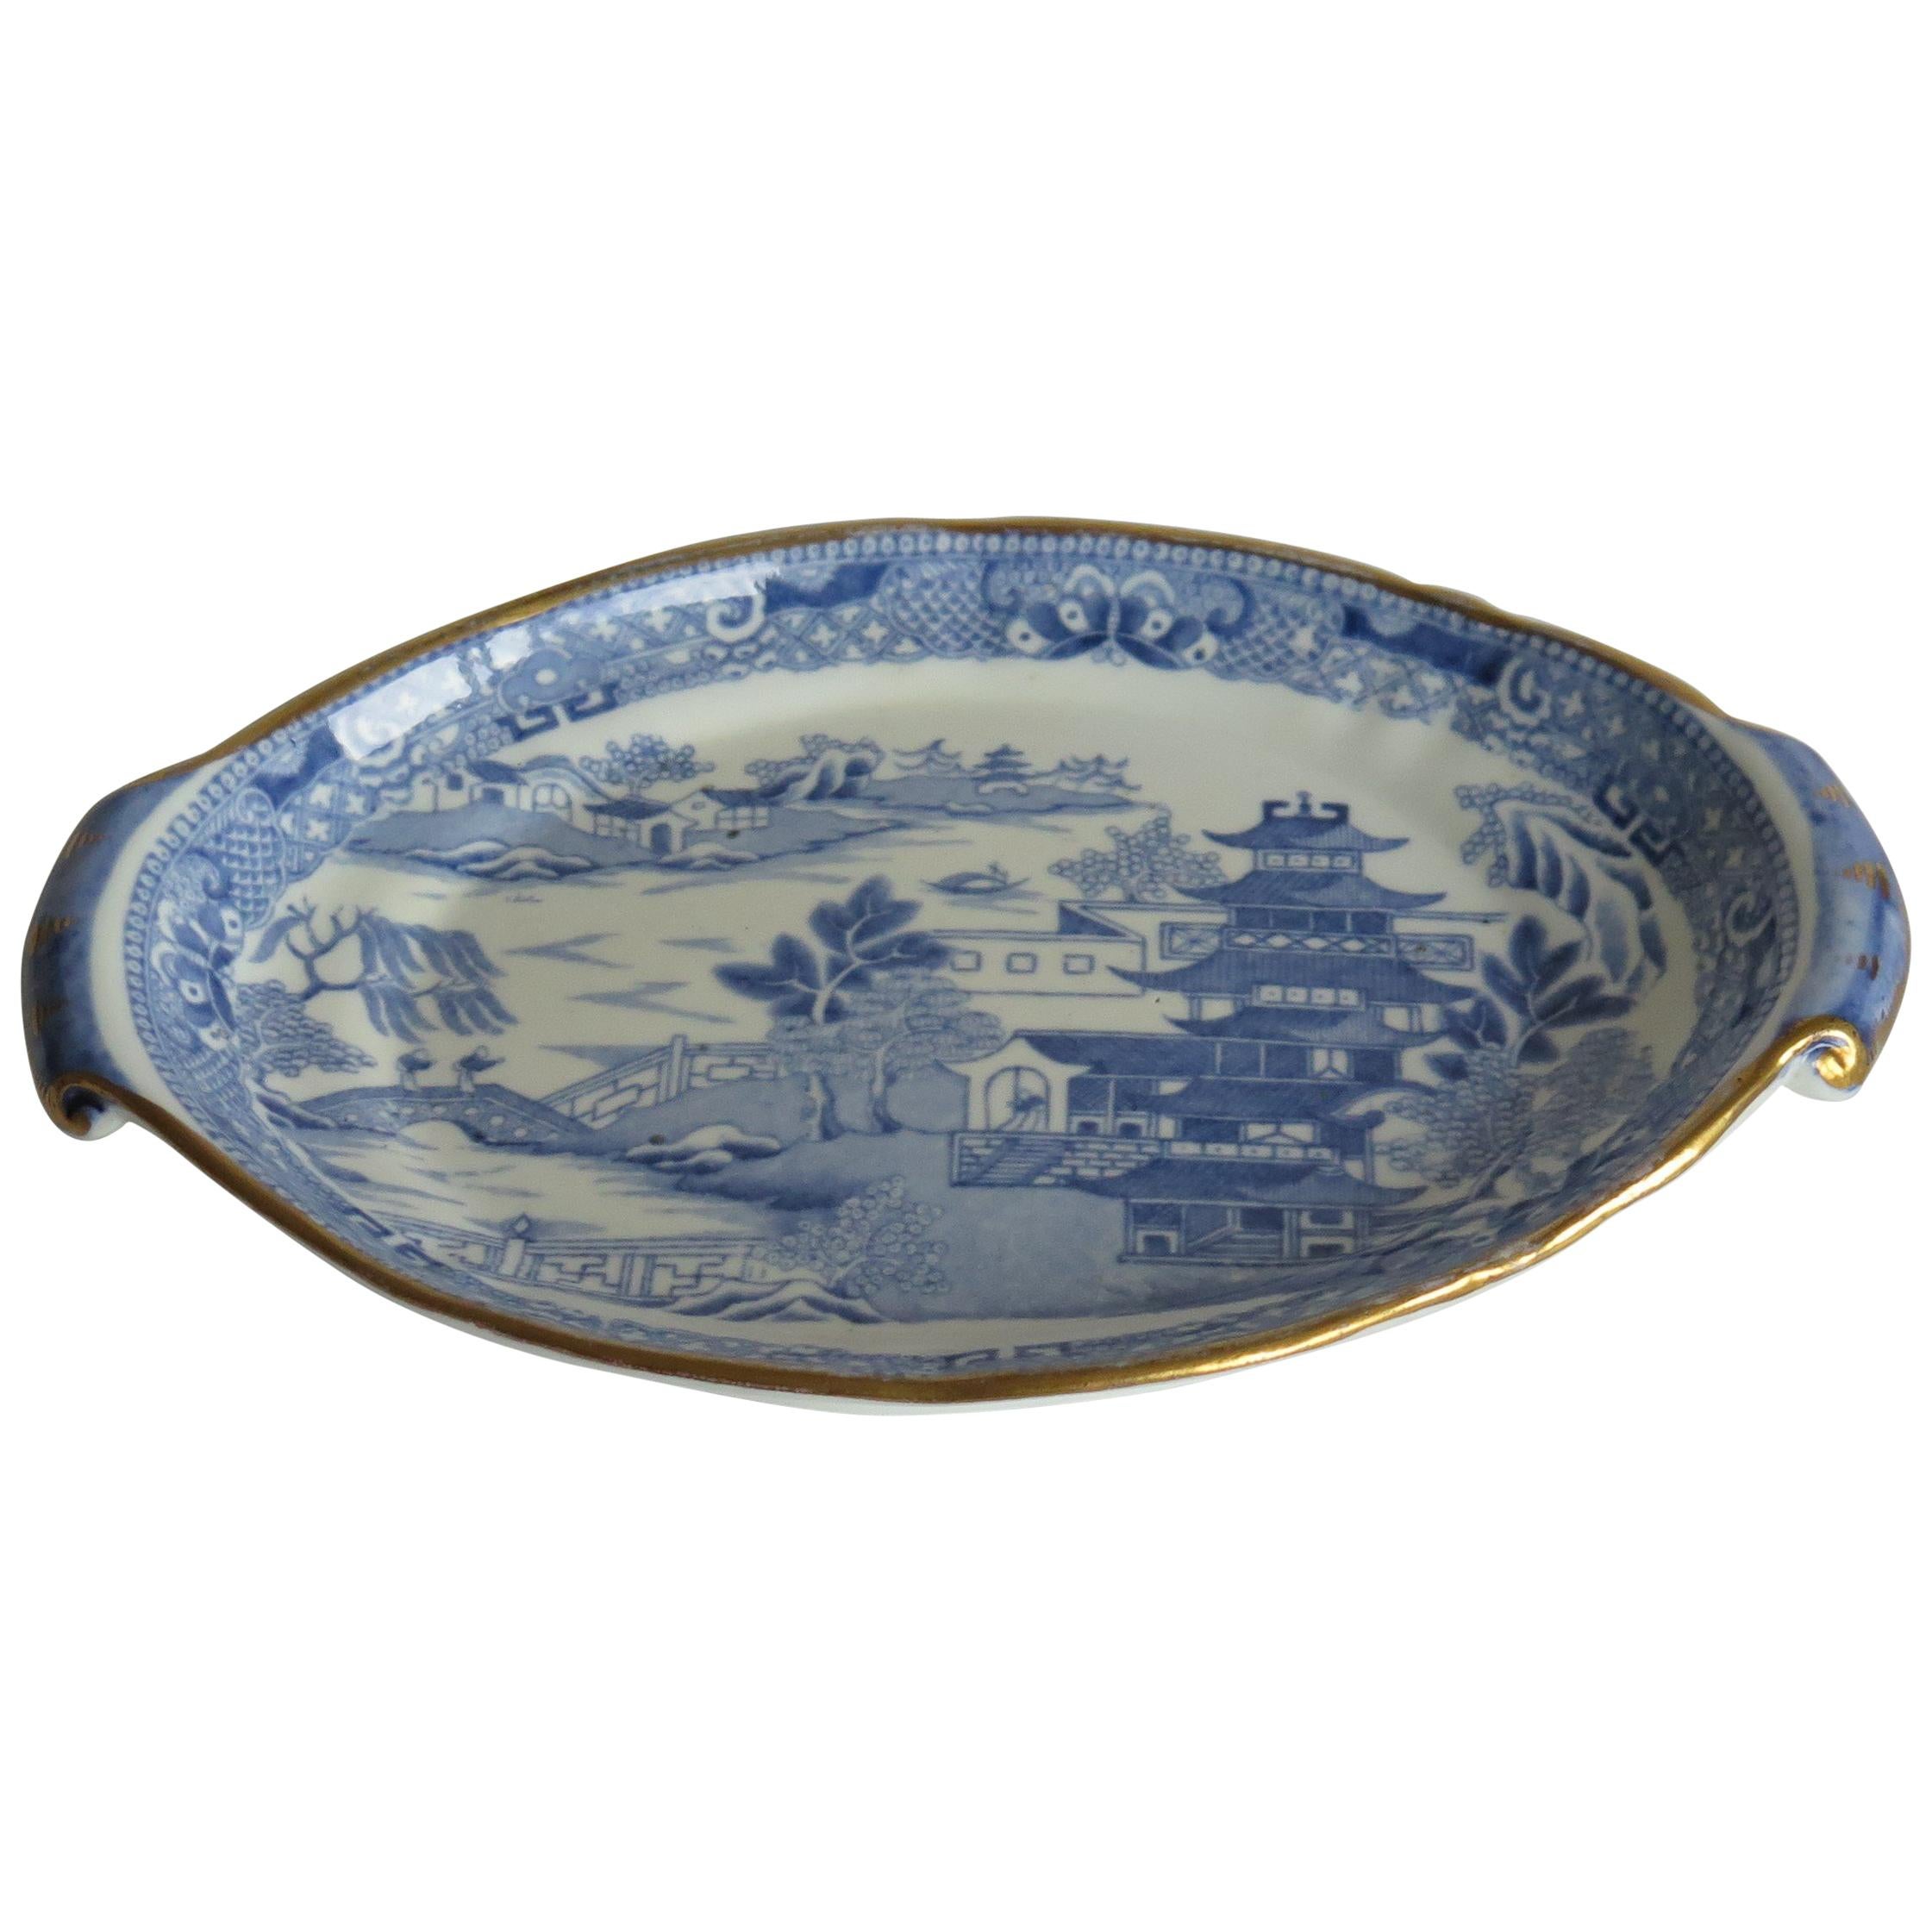 Miles Mason Teapot Stand or Dish Blue and White Pagoda Pattern, circa 1810